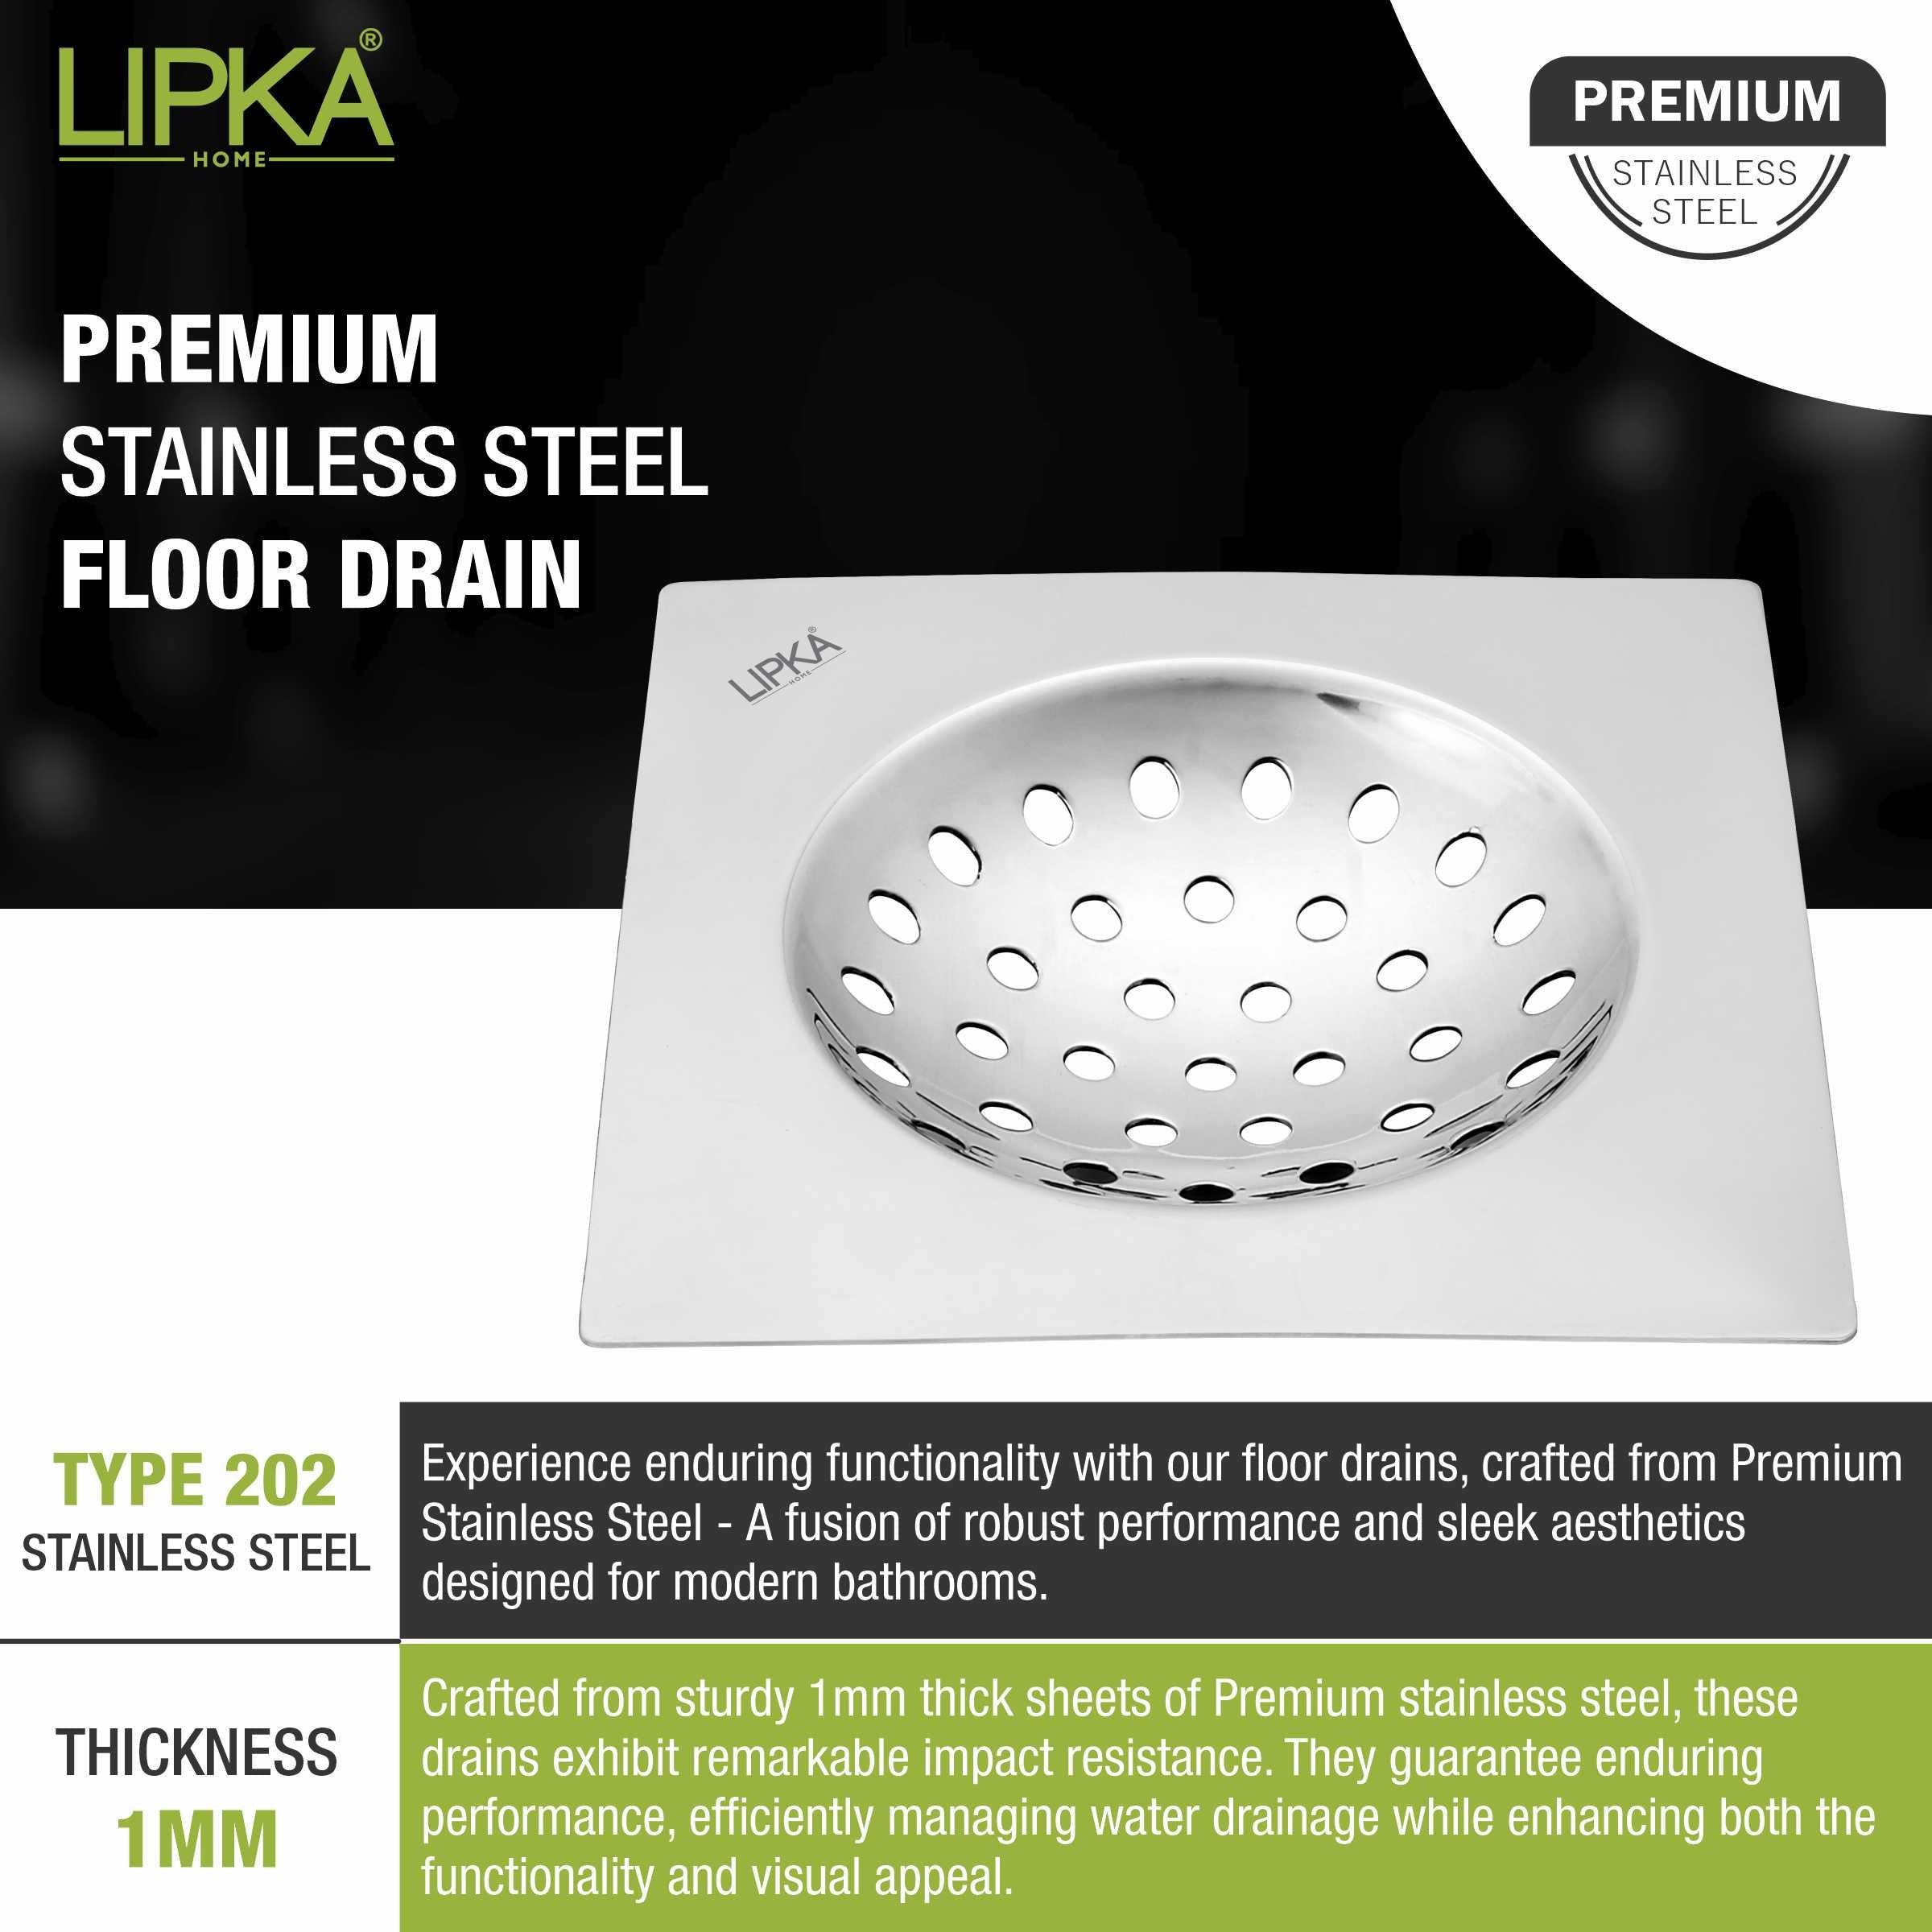 UNO Square Flat Cut Floor Drain (6 x 6 Inches) - LIPKA - Lipka Home